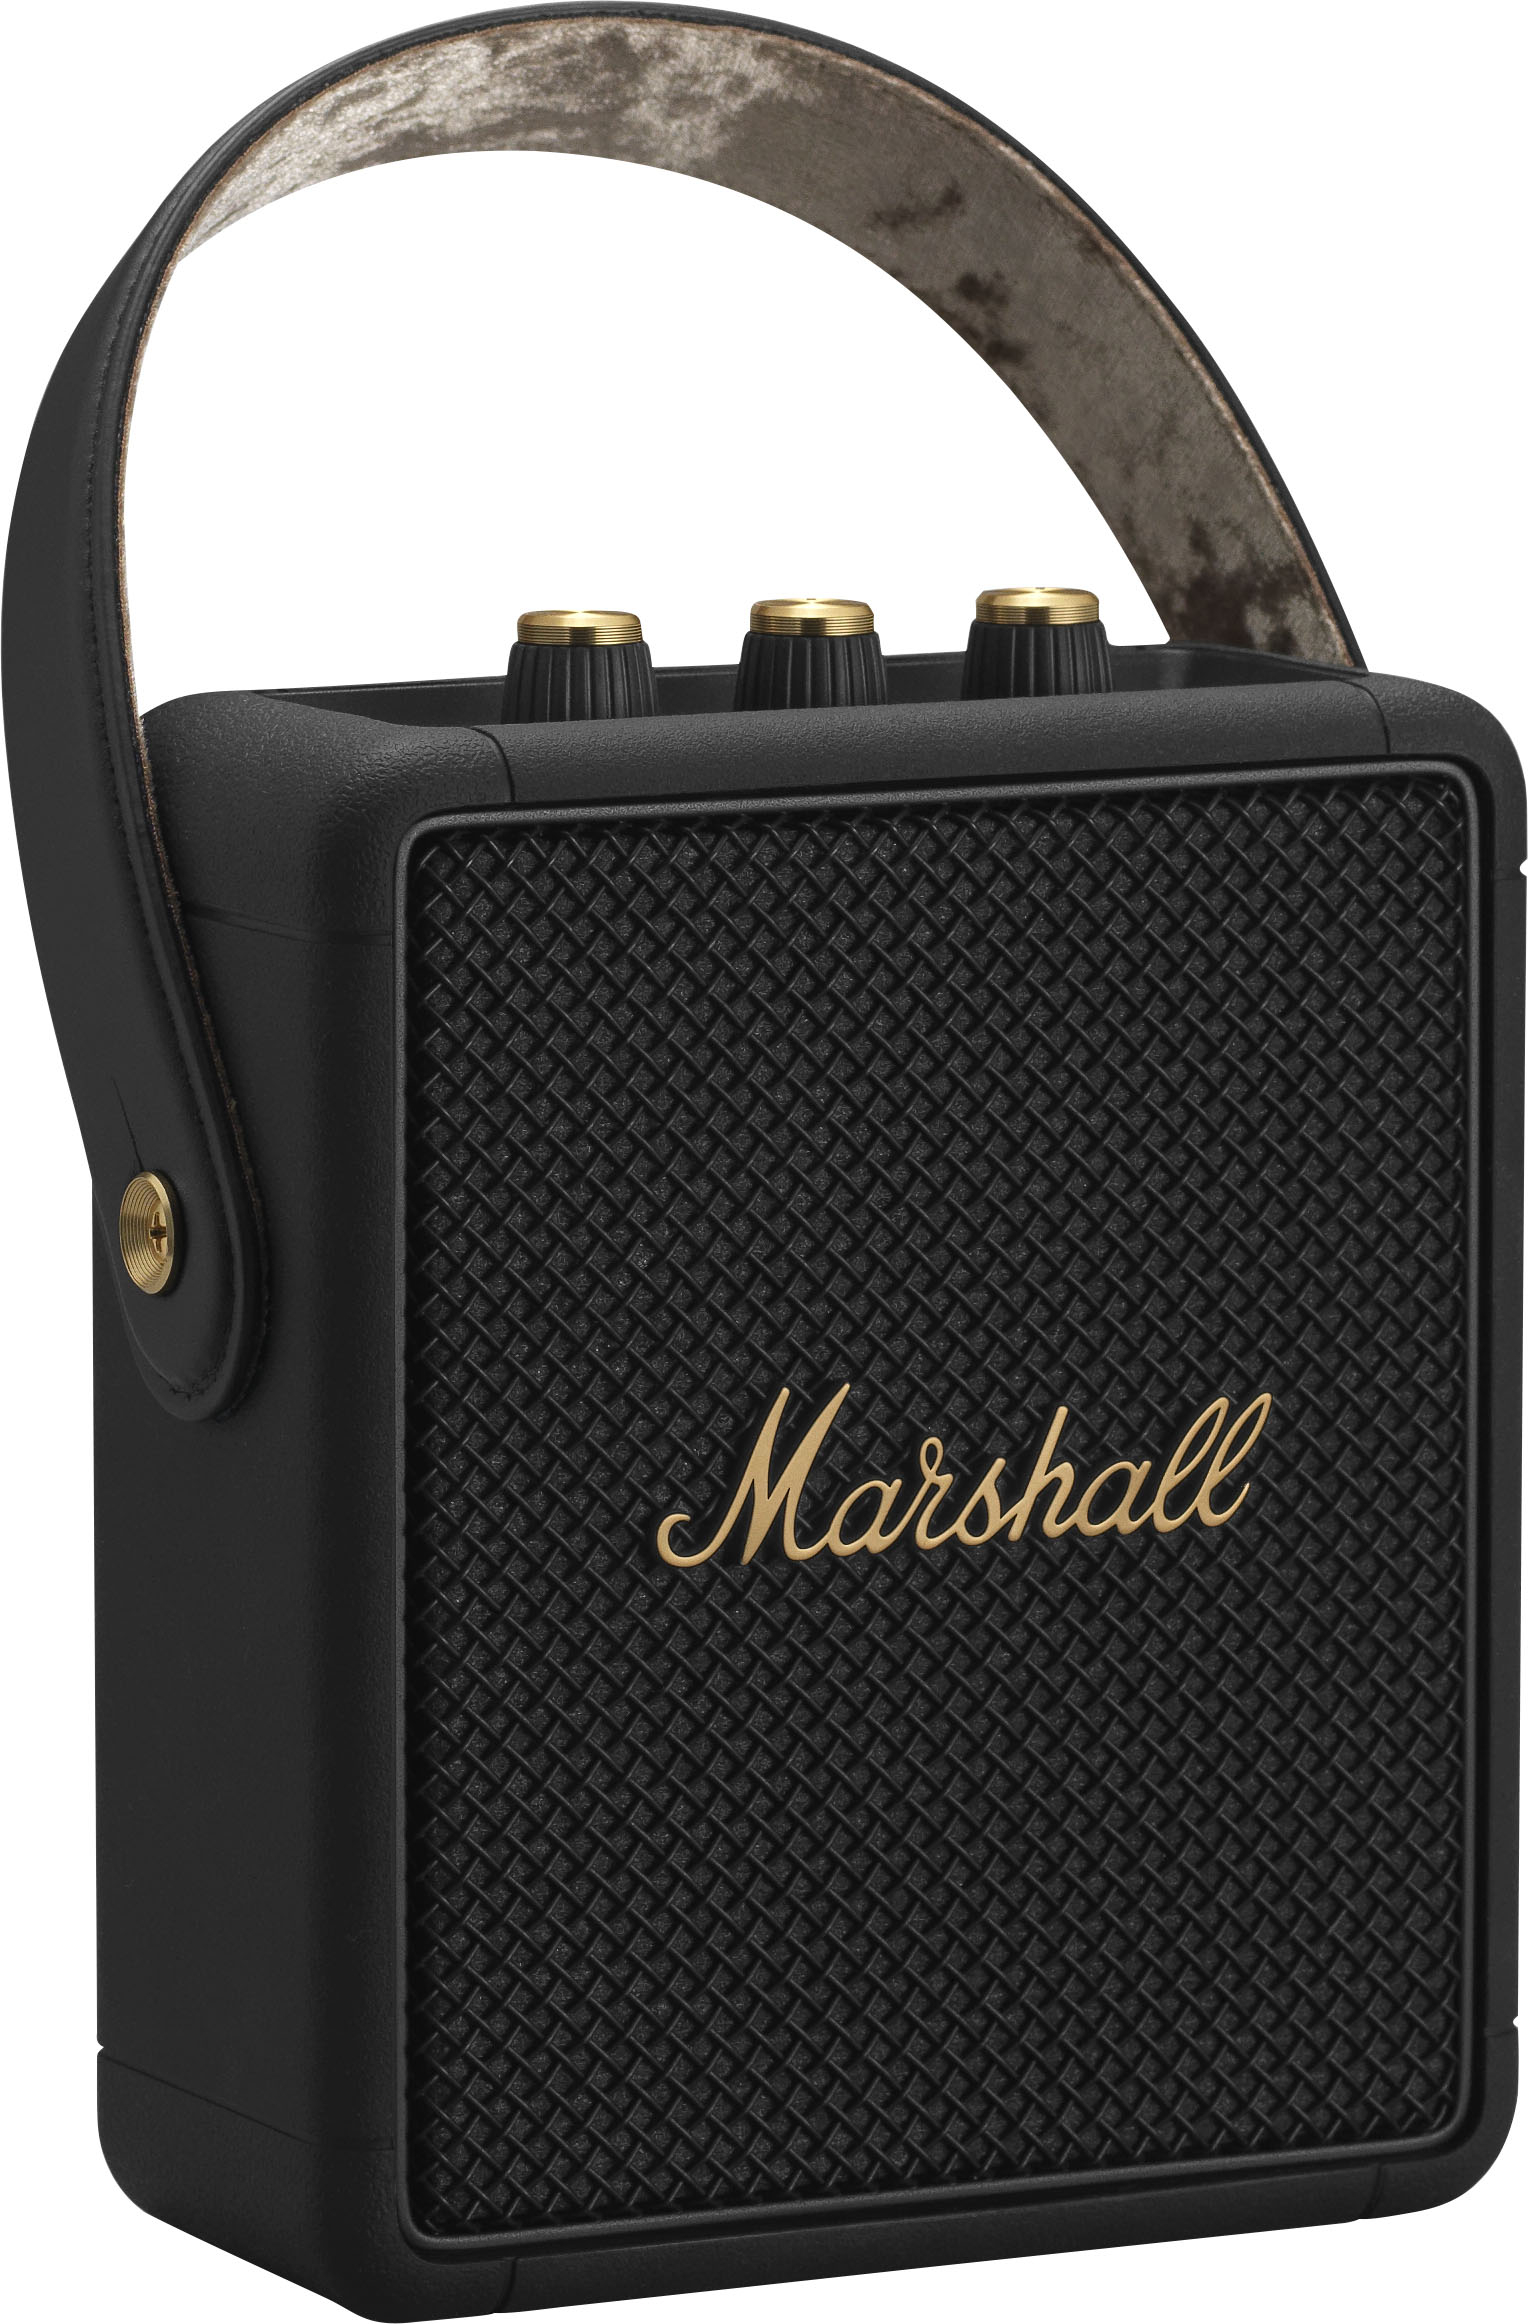 Angle View: Marshall - Woburn II Bluetooth Speaker - Black